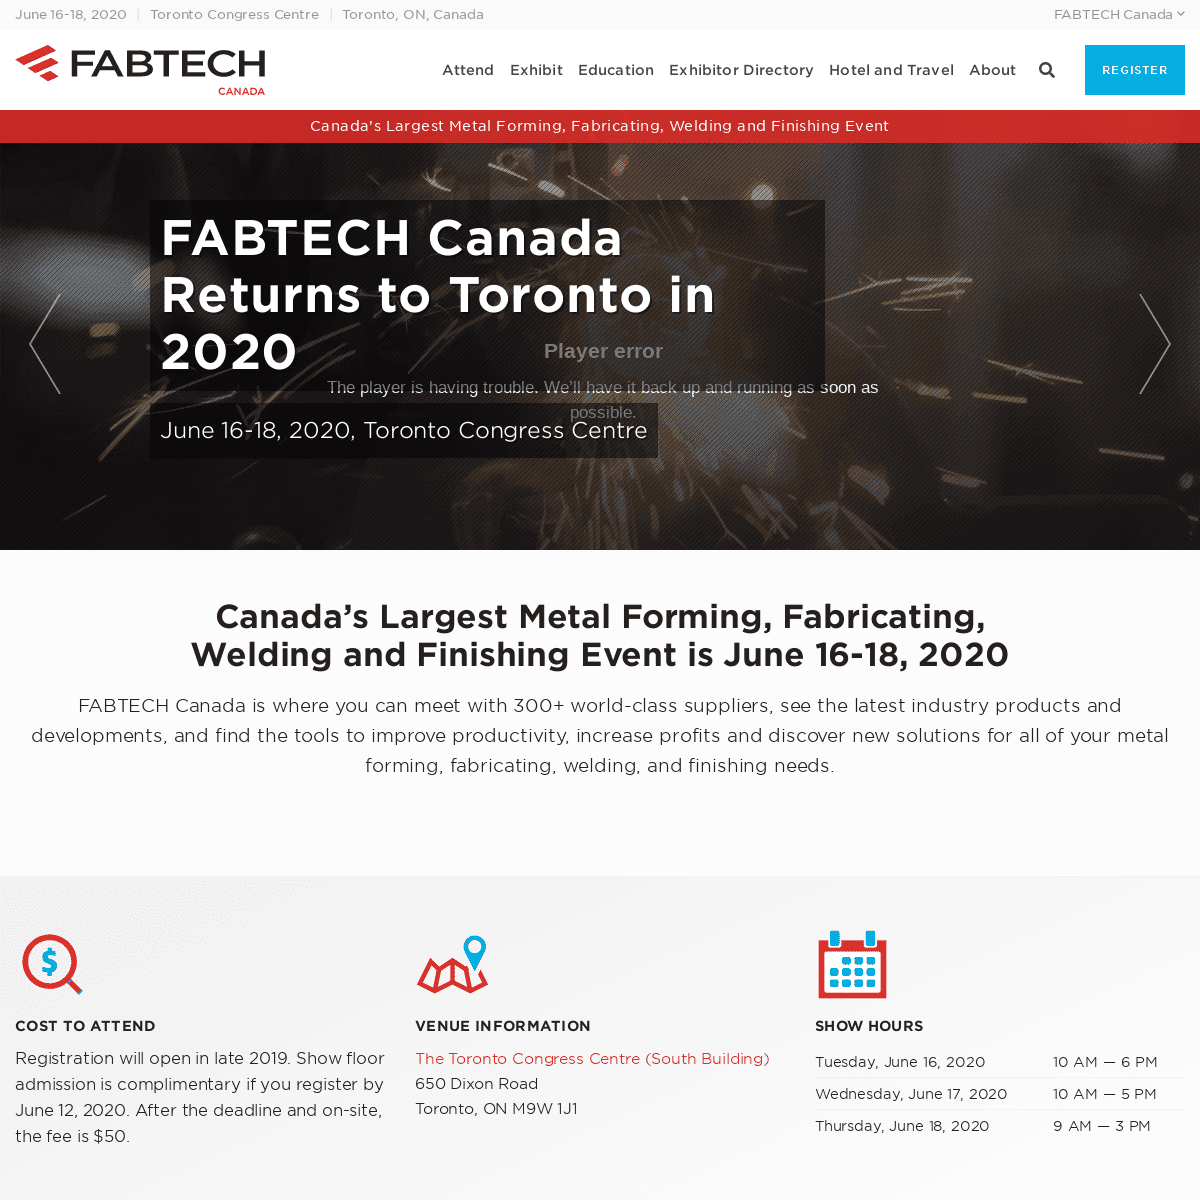 FABTECH Canada 2020 - Toronto